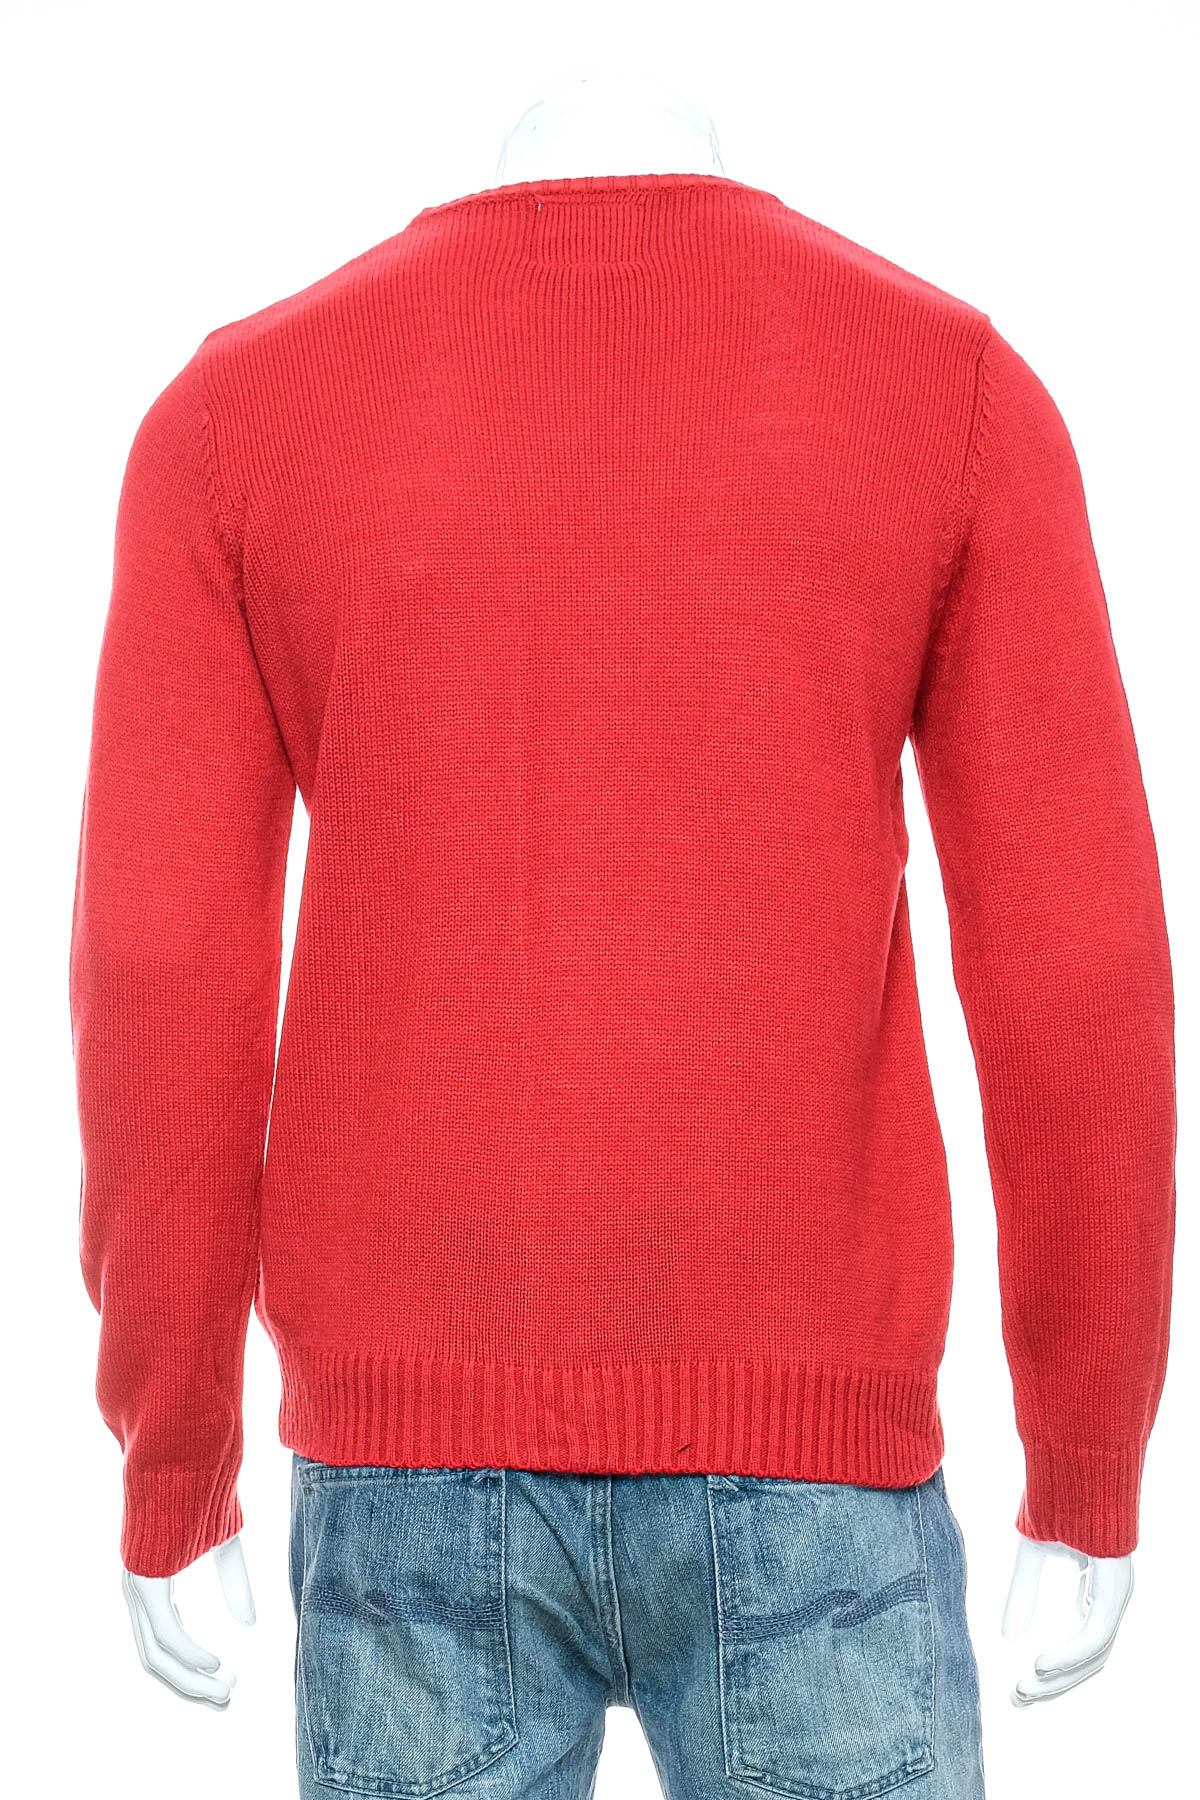 Men's sweater - Star - 1